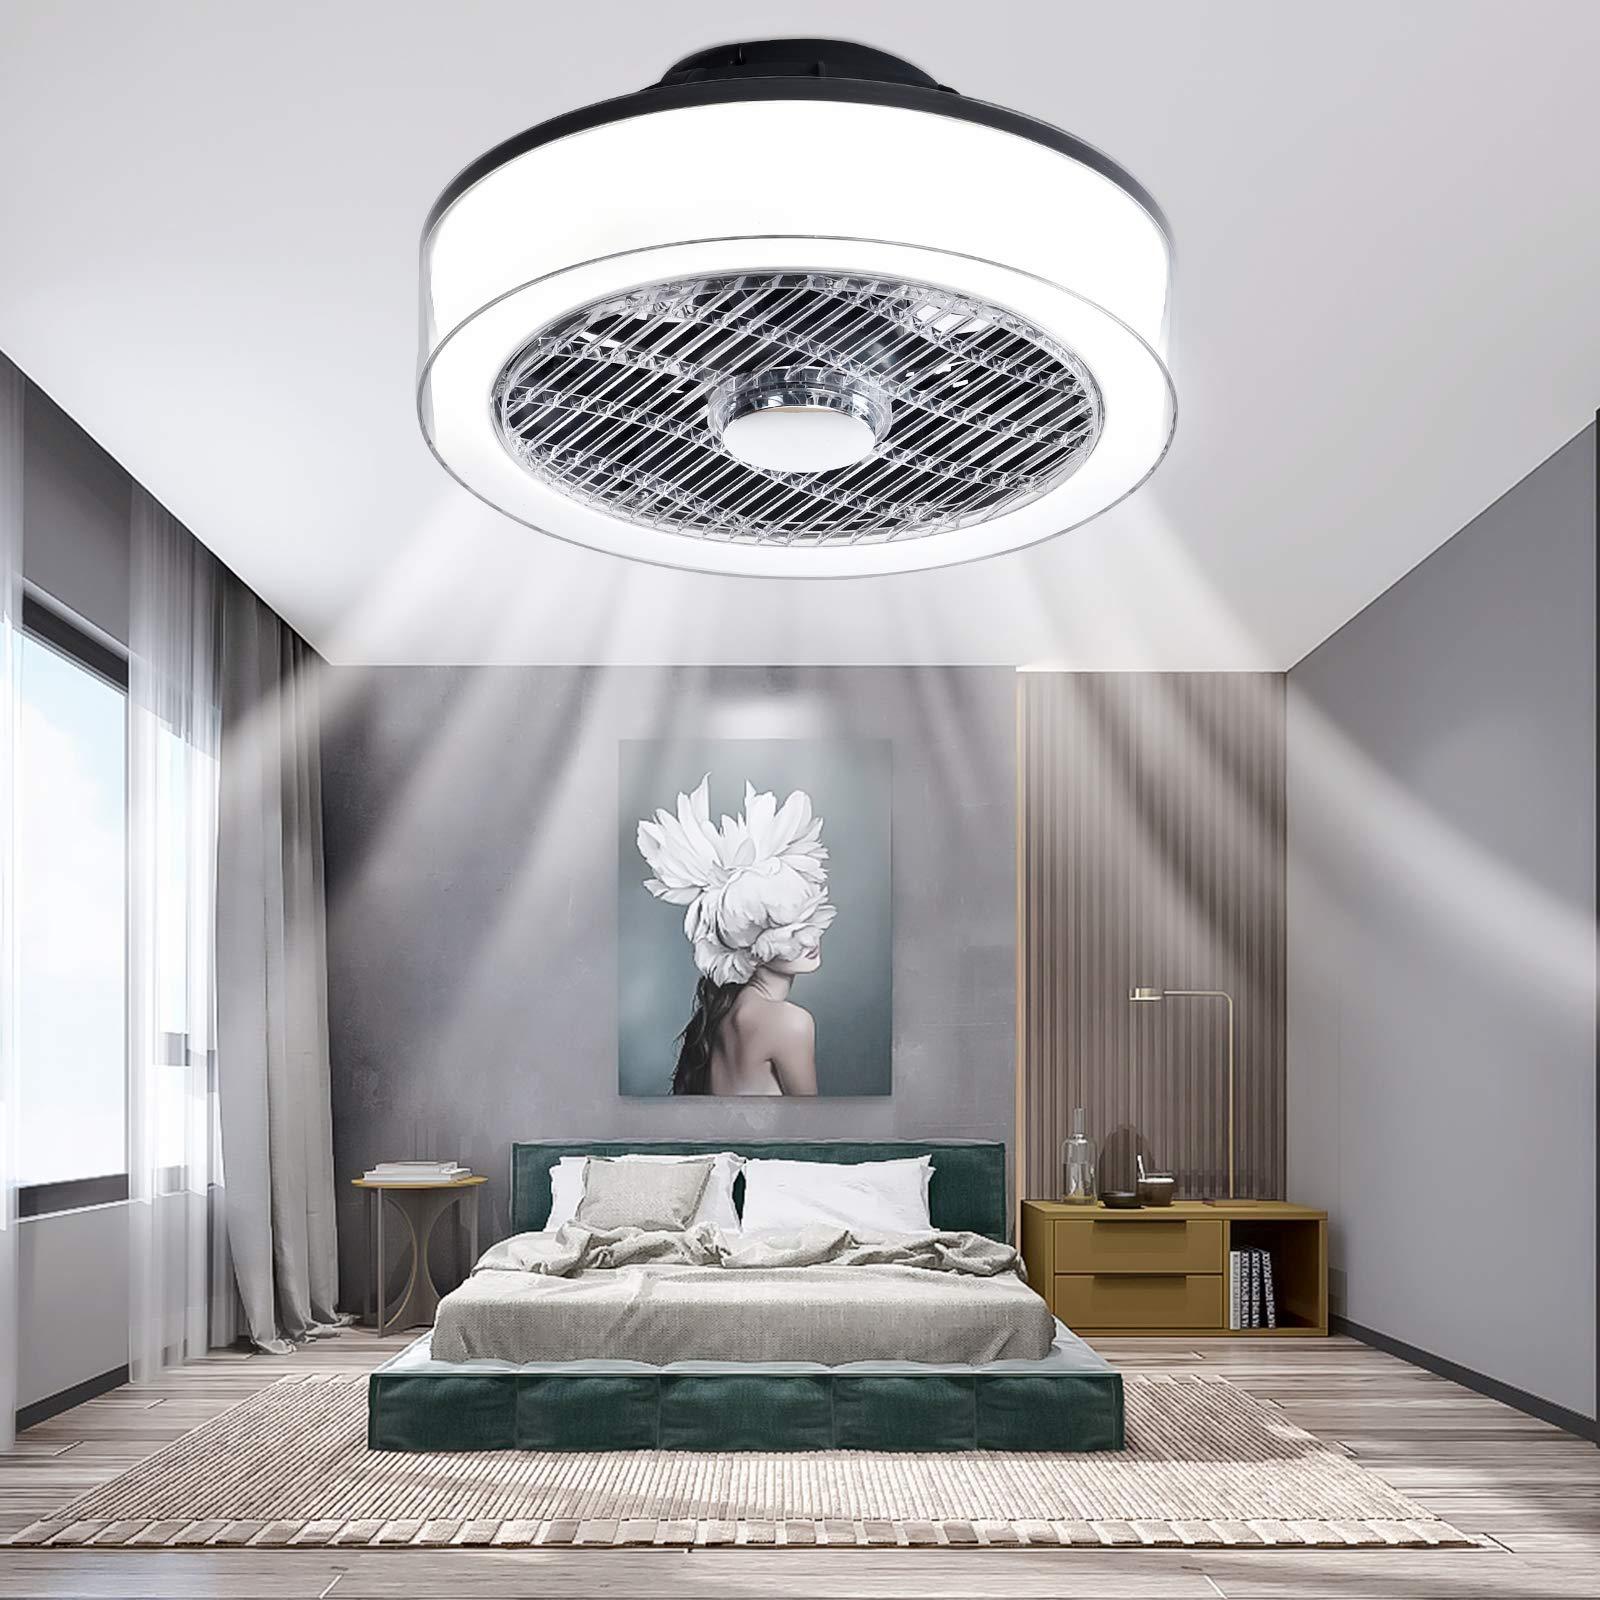 iyunxi modern ceiling fan with lights remote control 15 inch flush mount ceiling fan dimmable 3-speed low profile ceiling fan